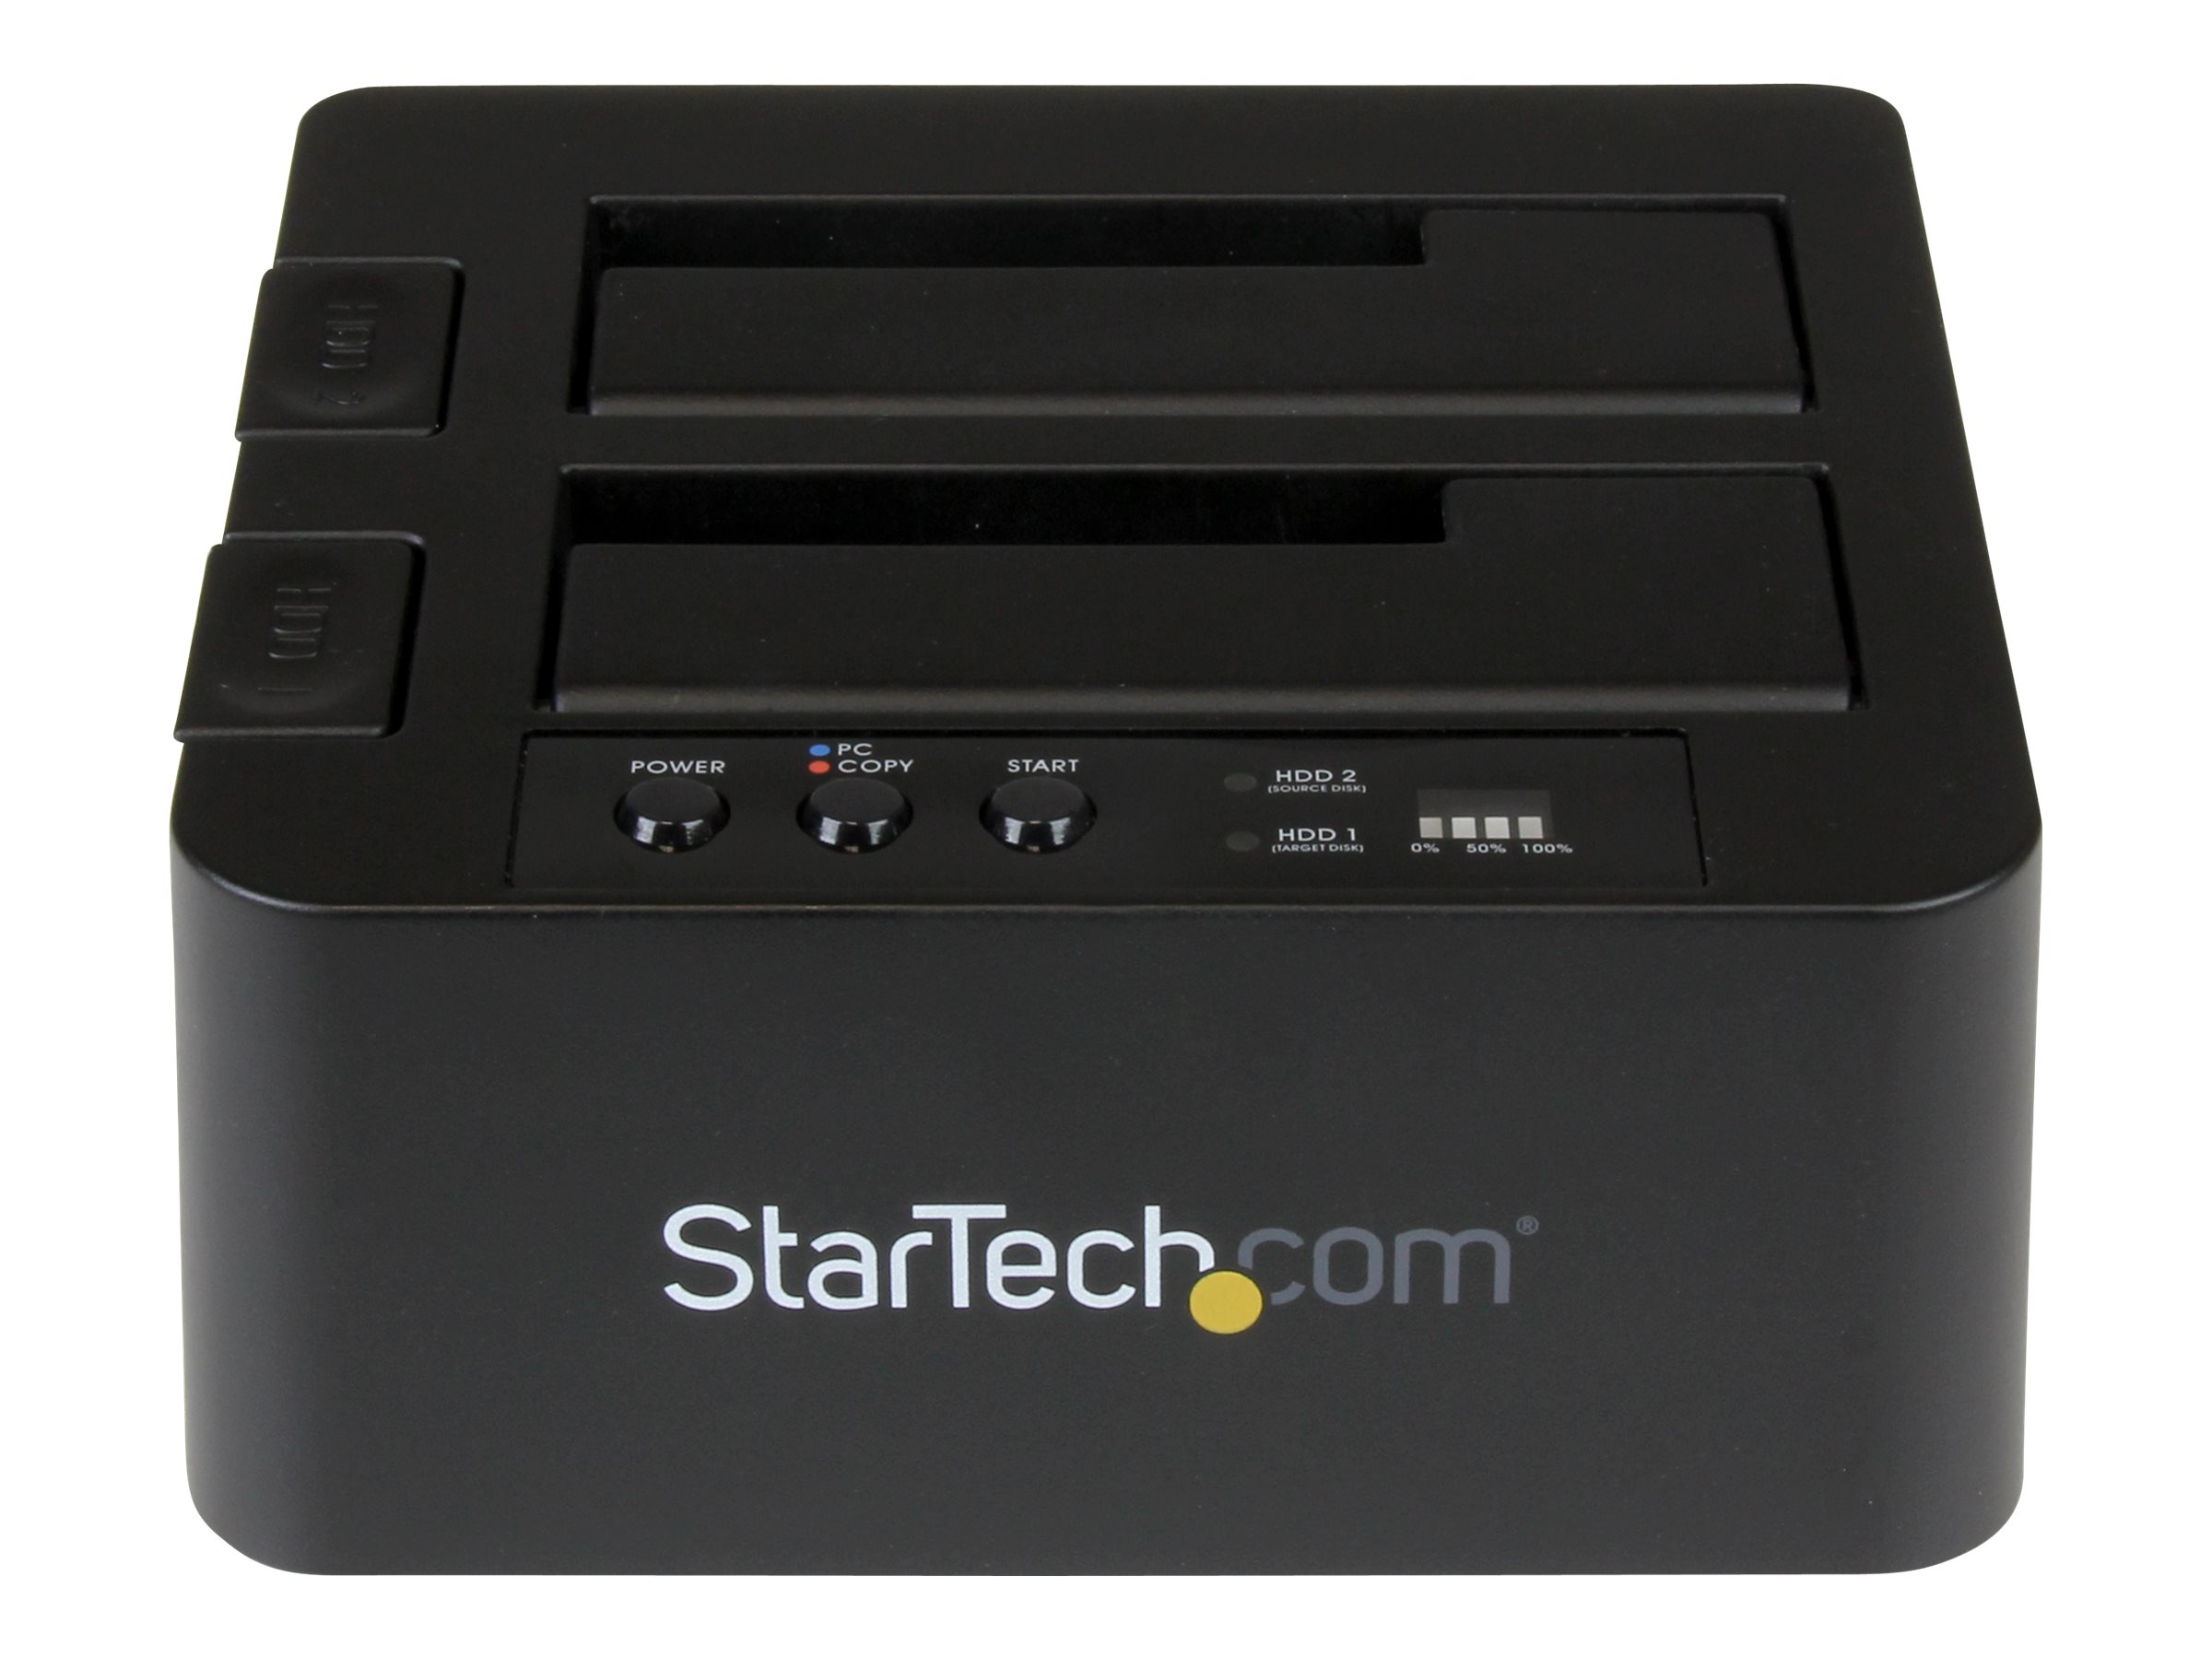 StarTech.com Standalone Hard Drive Duplicator, Dual Bay HDDSSD ClonerCopier, USB 3.1 (10 Gbps) to SATA III (6Gbps) HDDSSD Docking Station, Hard Disk Duplicator Dock - Hard Drive Cloner - Festplattenduplikator